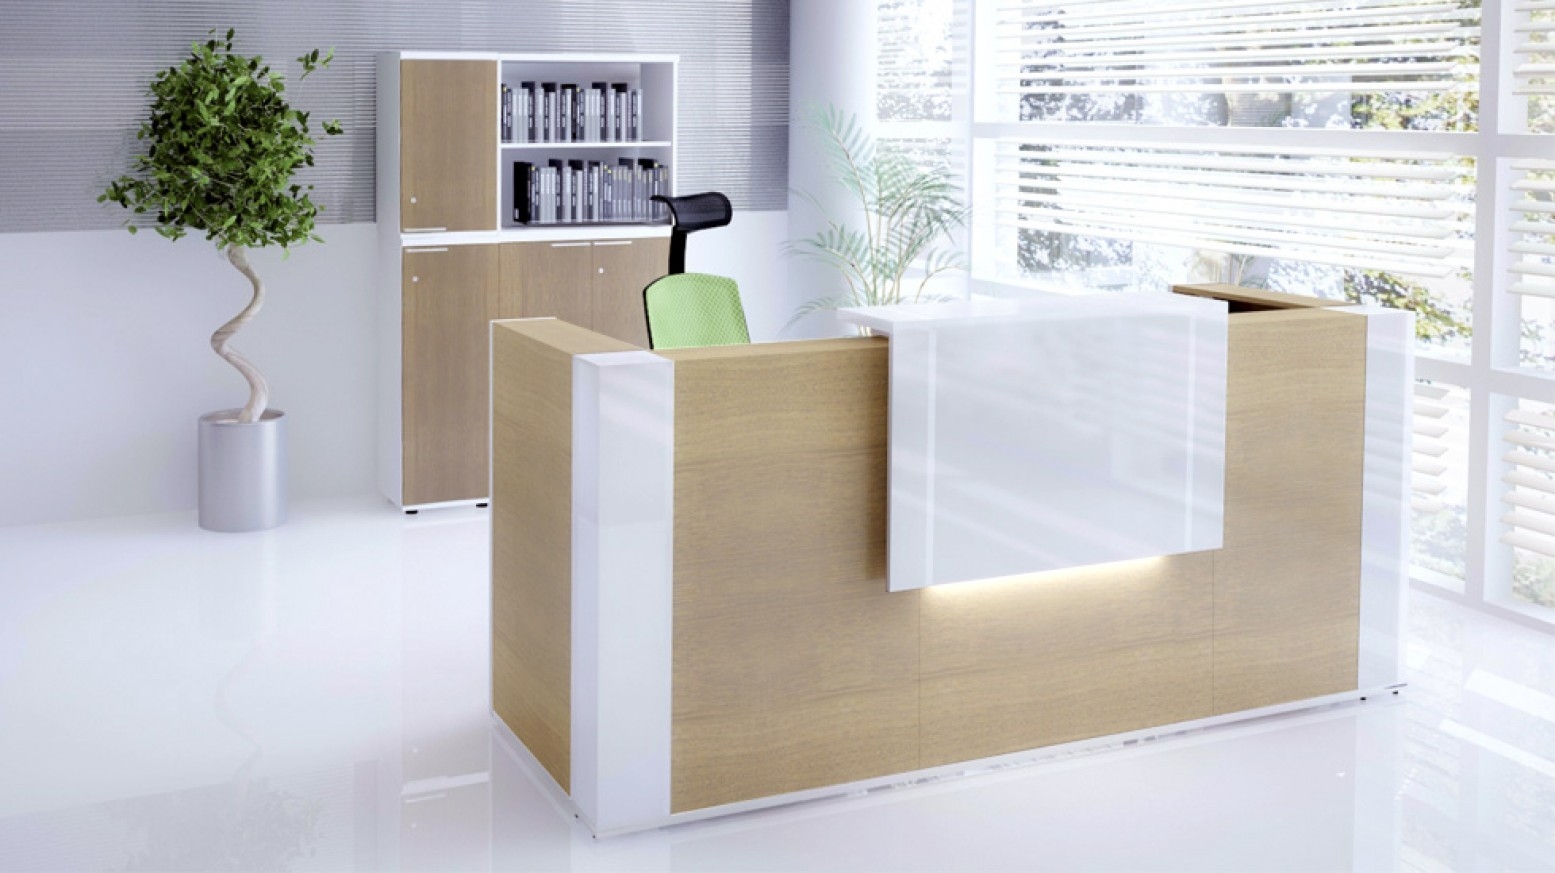 Tera W Medium Reception Desk W Light Panel Corner Units By Mdd